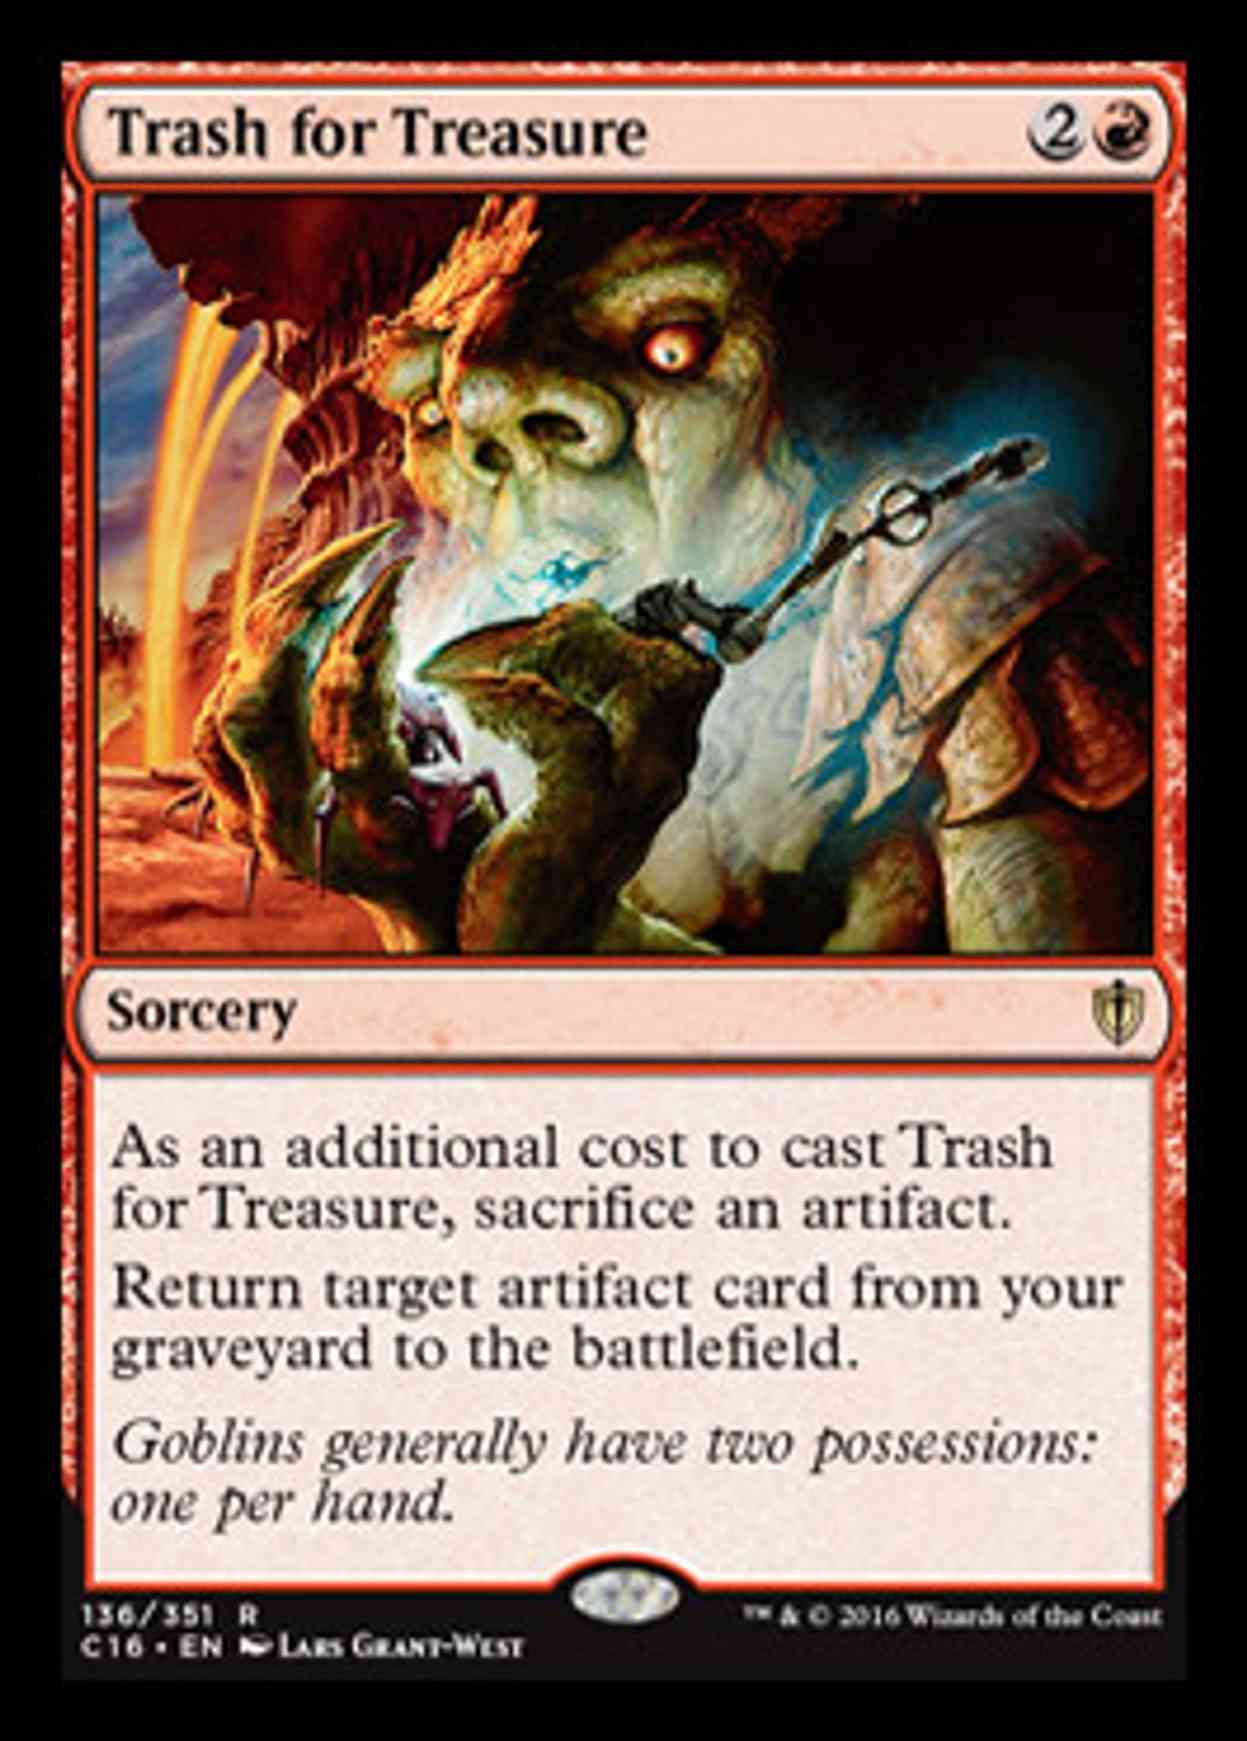 Trash for Treasure magic card front